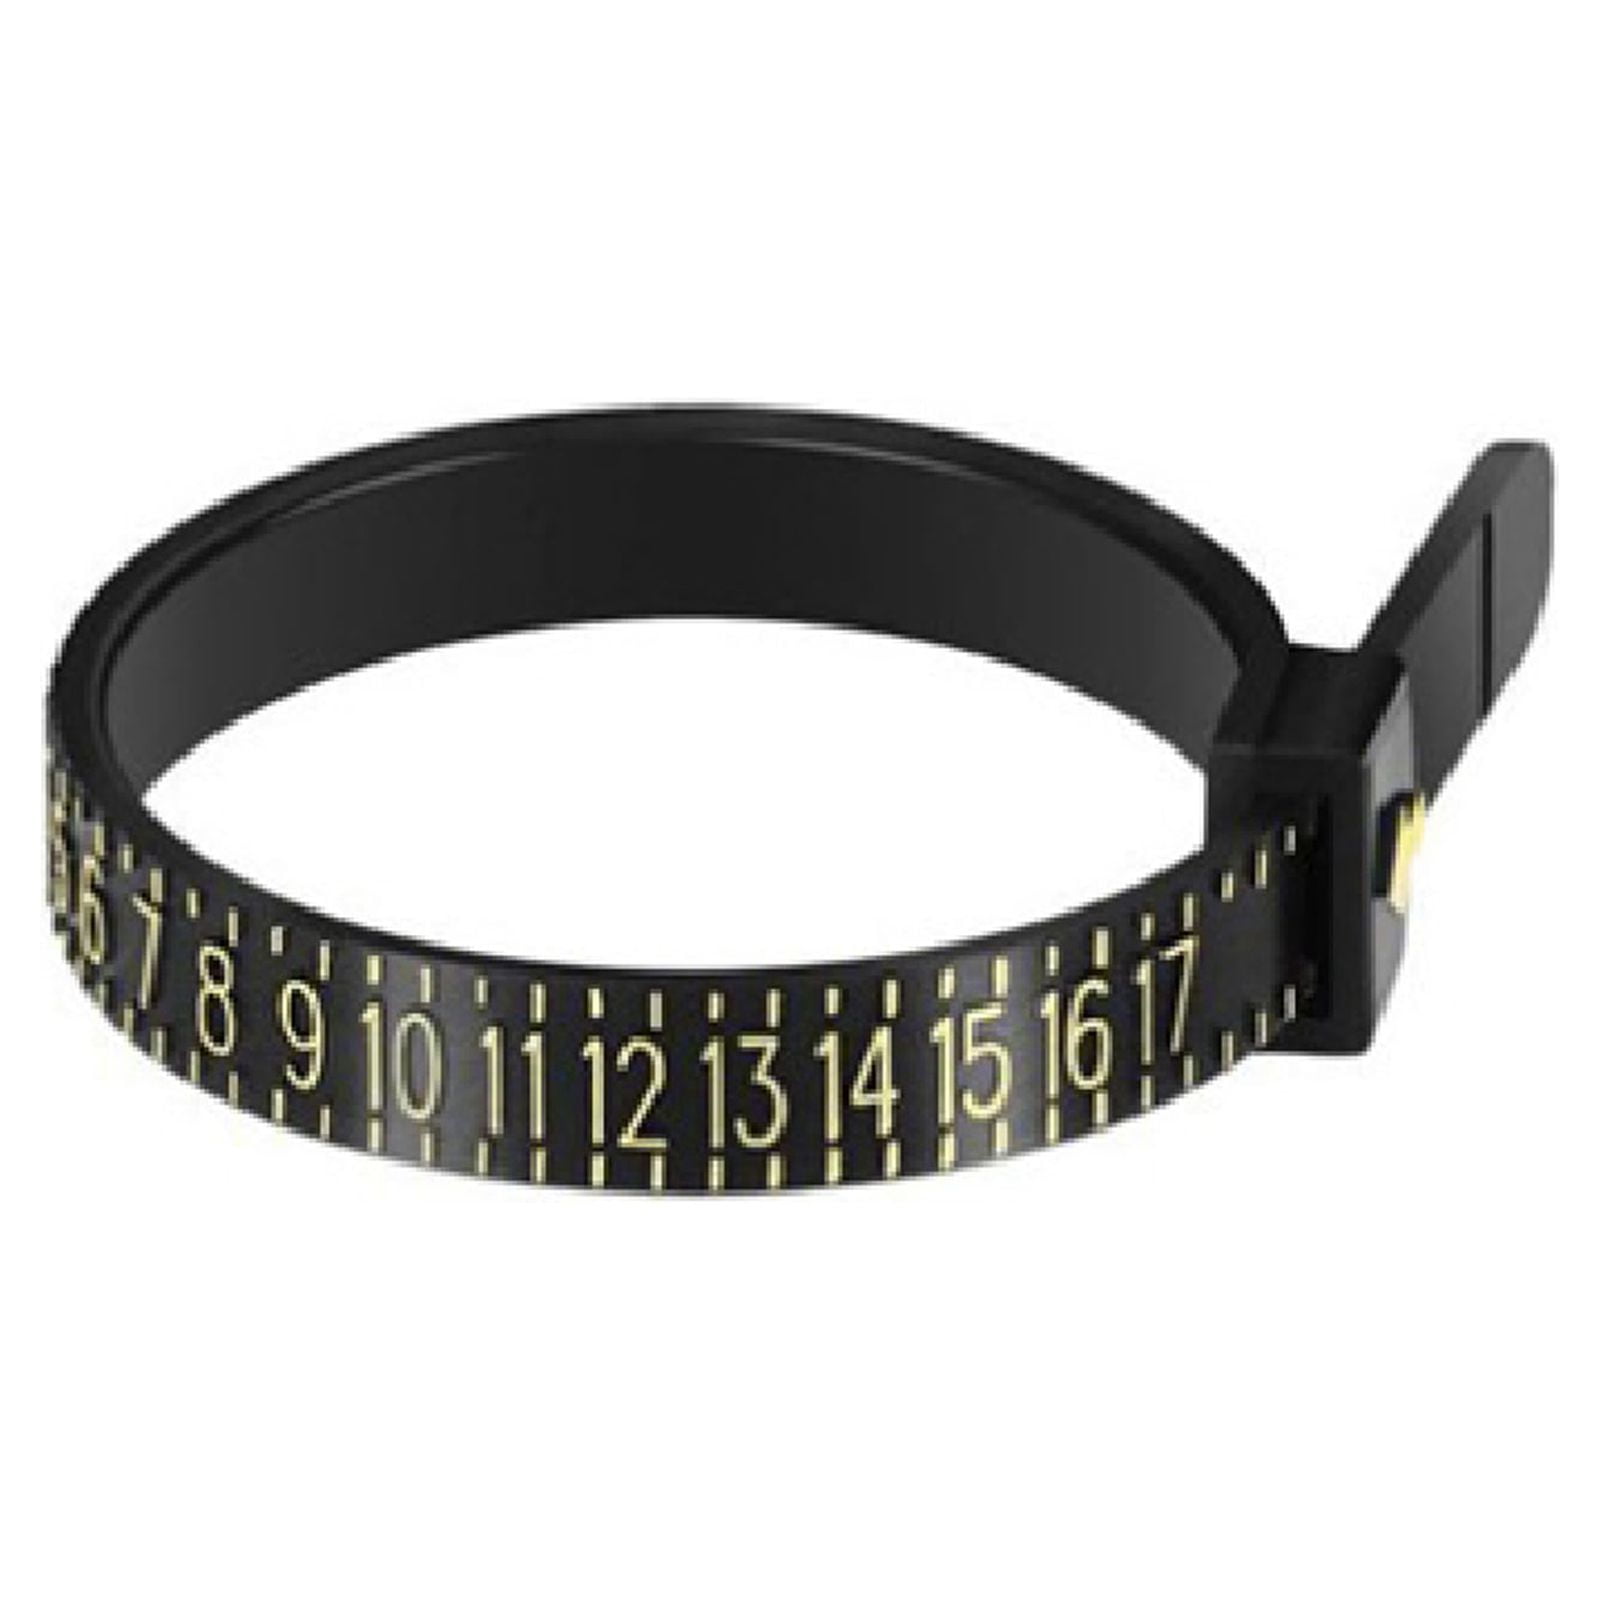 SEYHR Ring Sizer Measuring Belt US Size 1-17 Black Ring Sizing Tool,  Reusable Finger Sizer Belt - Adjustable Ring Sizer Belt - Ideal for Home  and